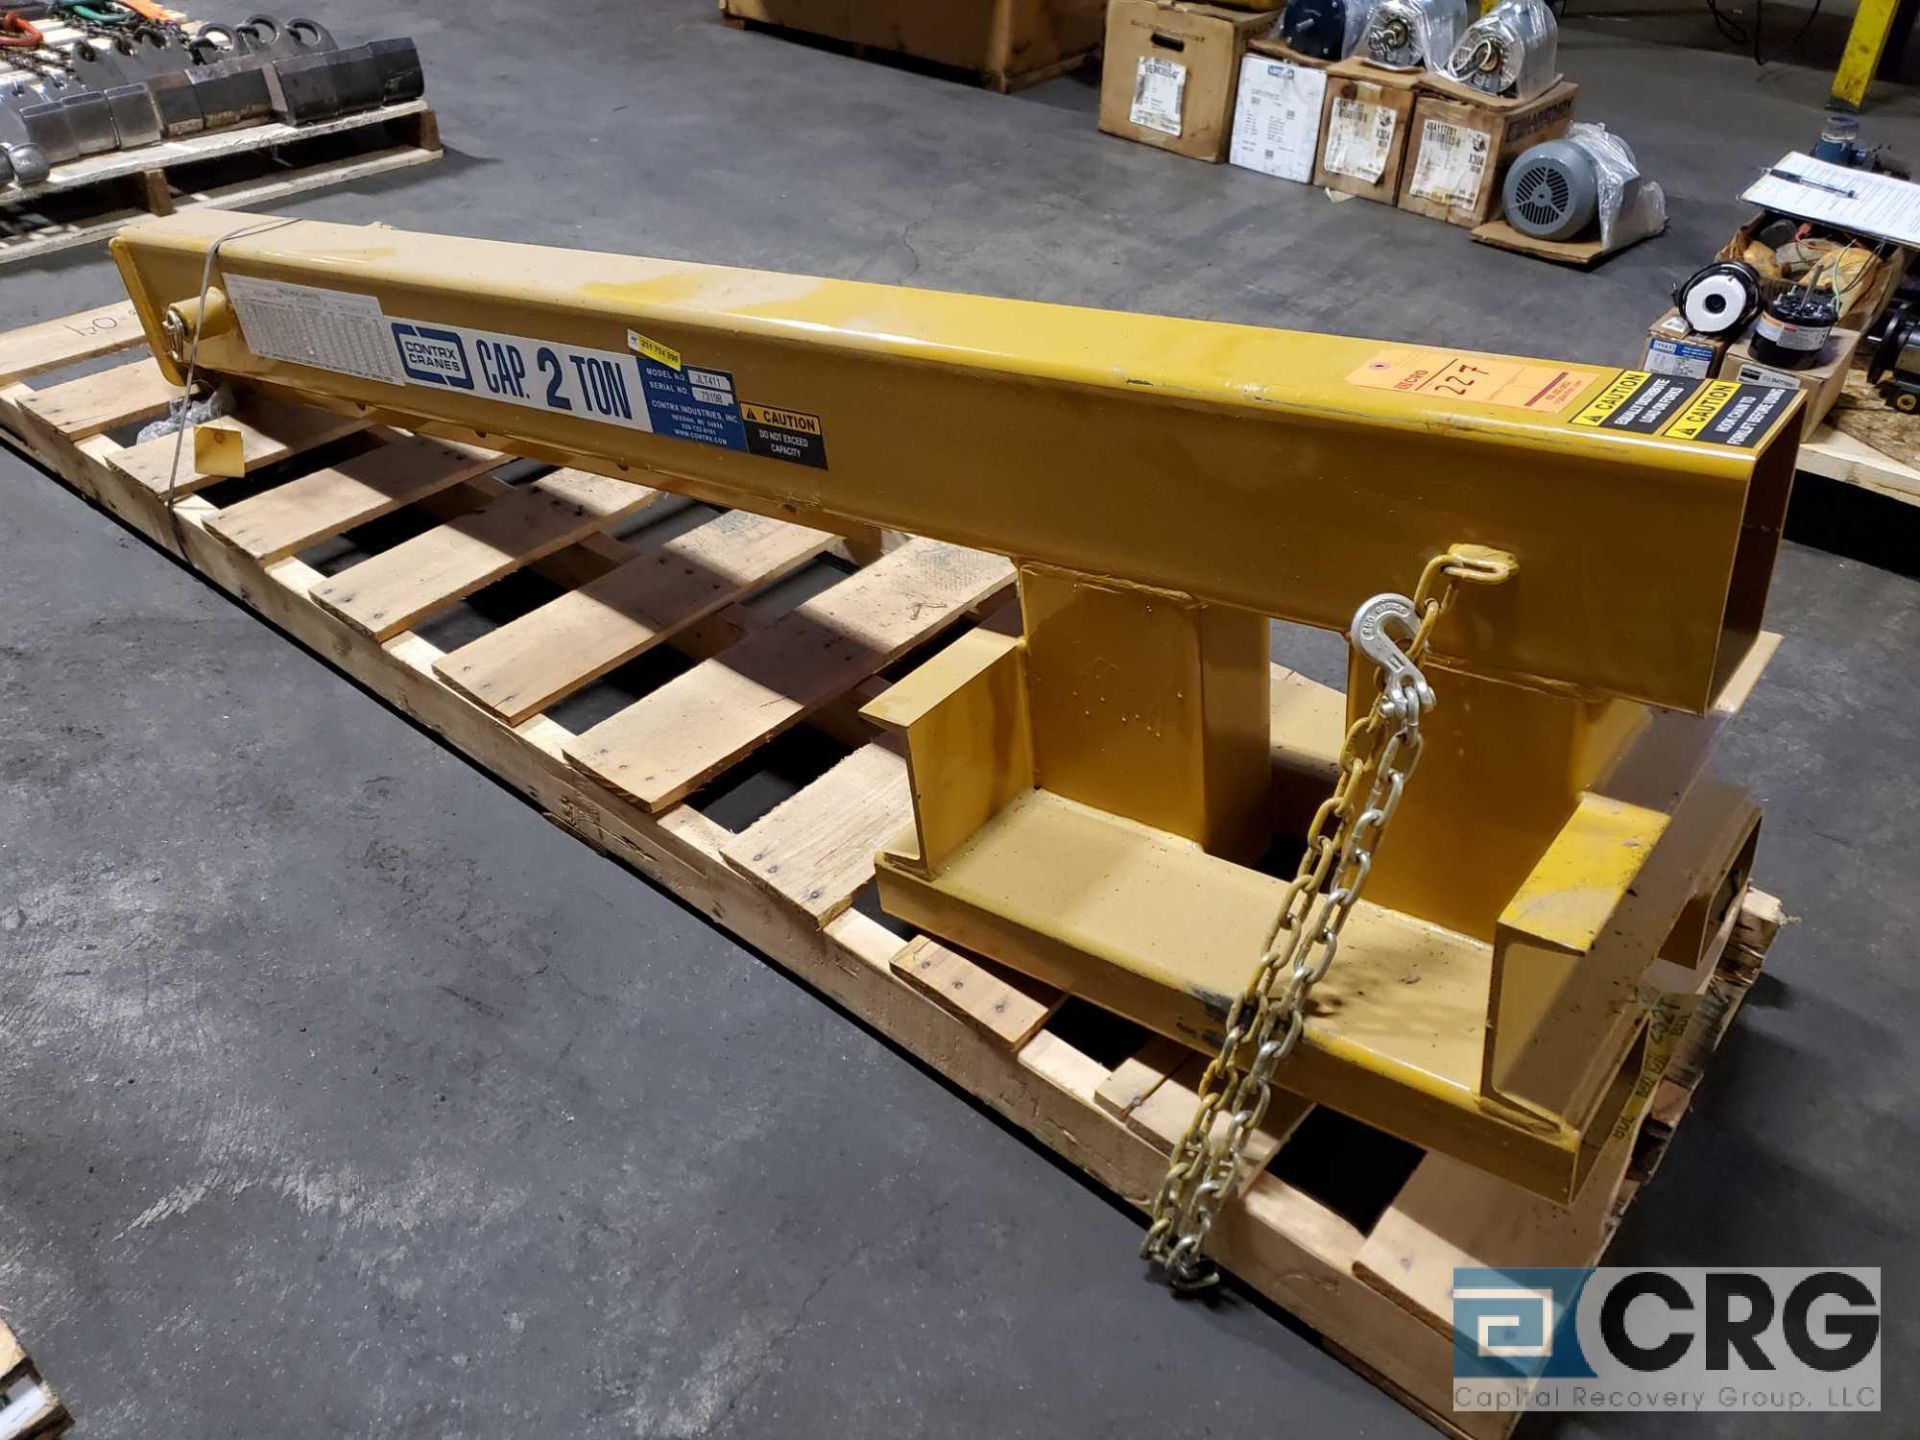 Contrx cranes boom lift forklift attachment, 2 ton capacity, m/n JLT411 extends up to 13 ft.